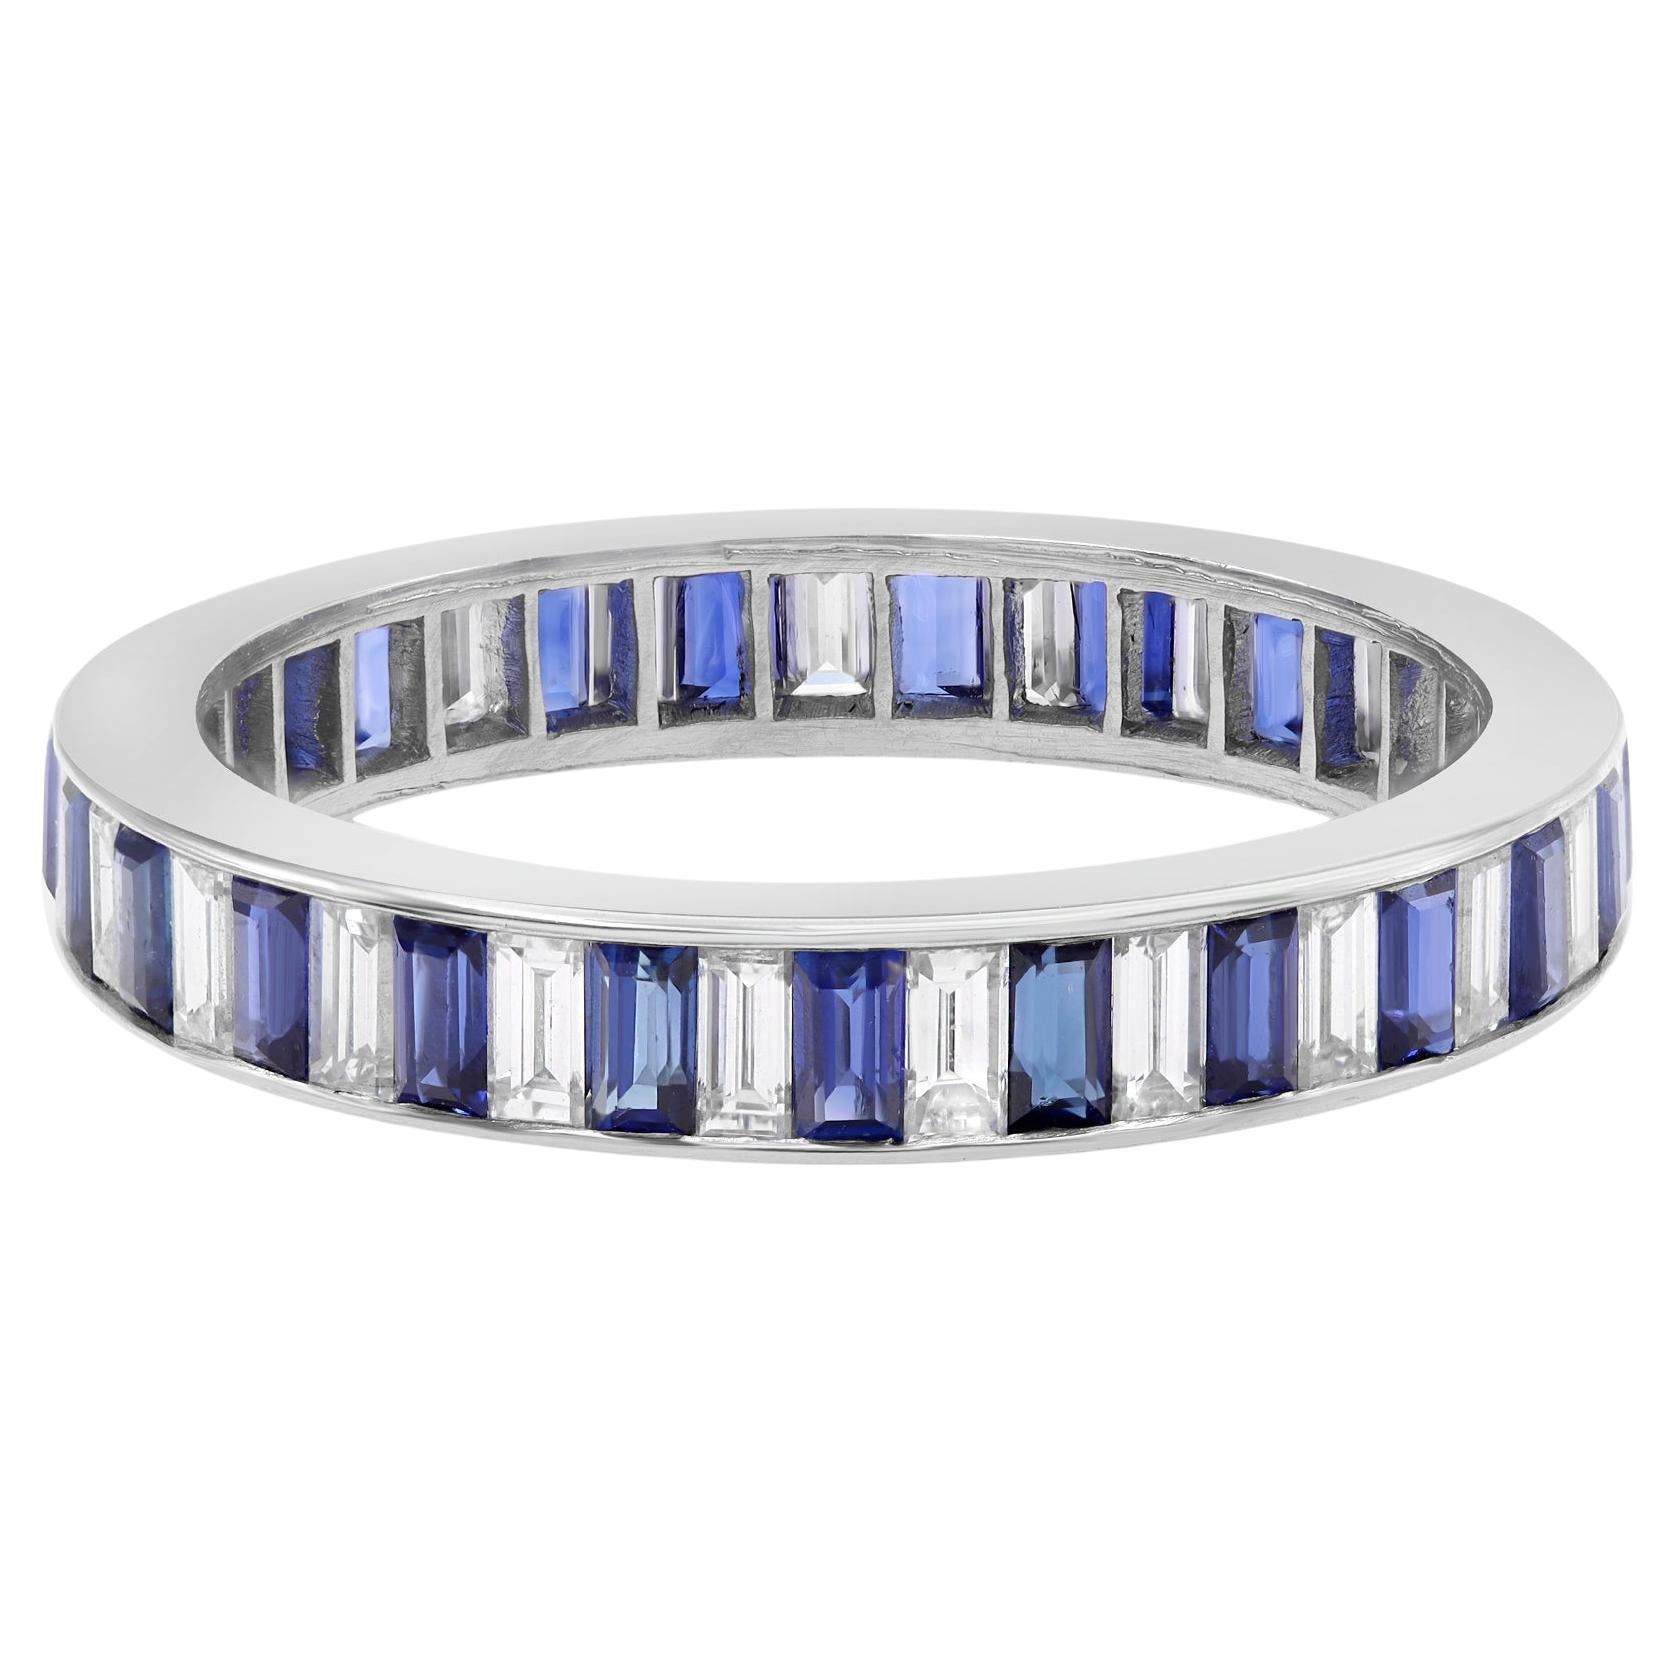 Channel Set Blue Sapphire Diamond Eternity Band Ring Platinum 1.72Cttw Size 6.75 For Sale